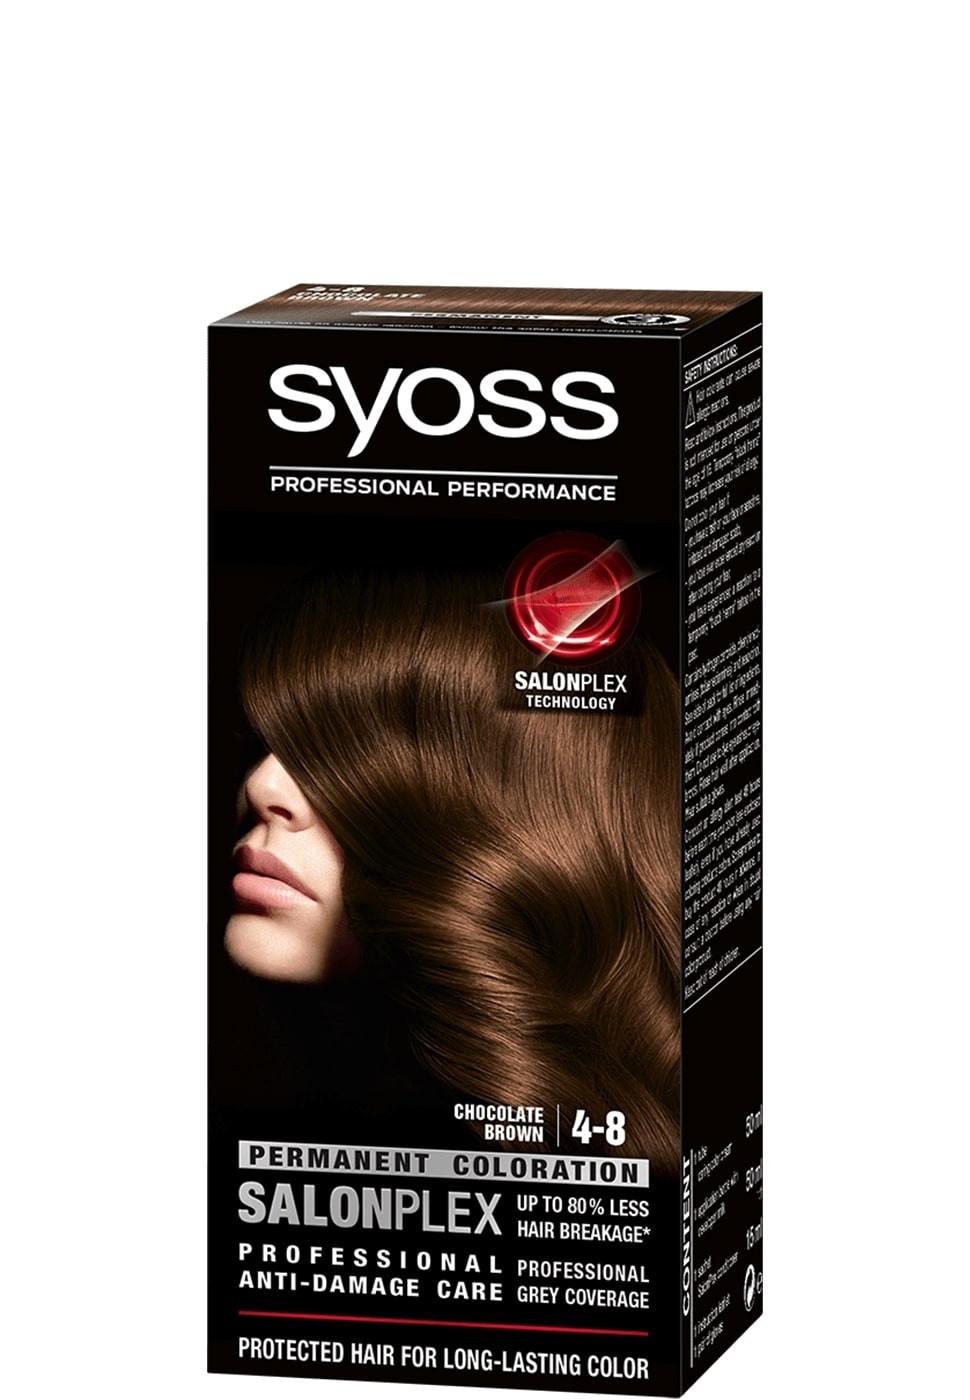 Сьес каштановый. Сьес 4-8 каштановый шоколадный. Syoss стойкая крем-краска для волос каштановый шоколадный 4-8. Крем краска для волос Syoss 4-8. Краска для волос `Syoss` SALONPLEX тон 4-1 (каштановый).